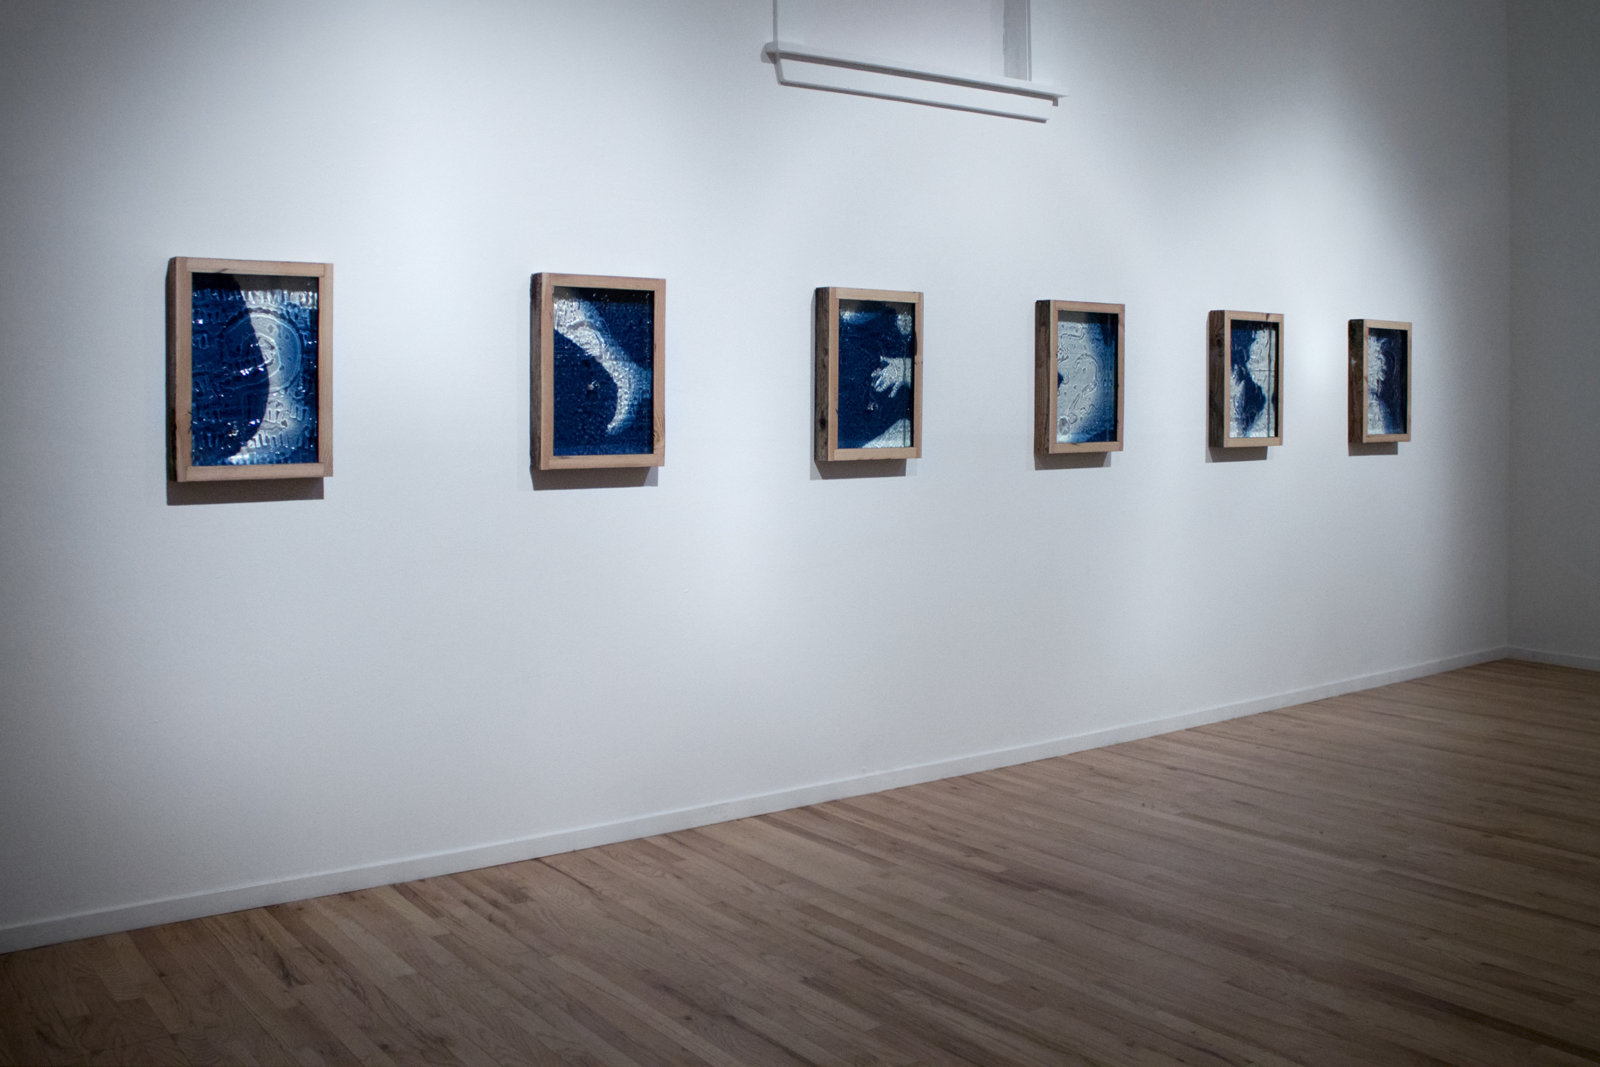 Kasper Feyrer, The Pedestrians: Left Head, Right Head, Left Body, Right Body, Left Foot, Right Foot, 2014, 6 cyanotypes, dice, aged fir, mirror inlay, each 22 x 16 x 3 inches (56 x 41 x 8 cm)